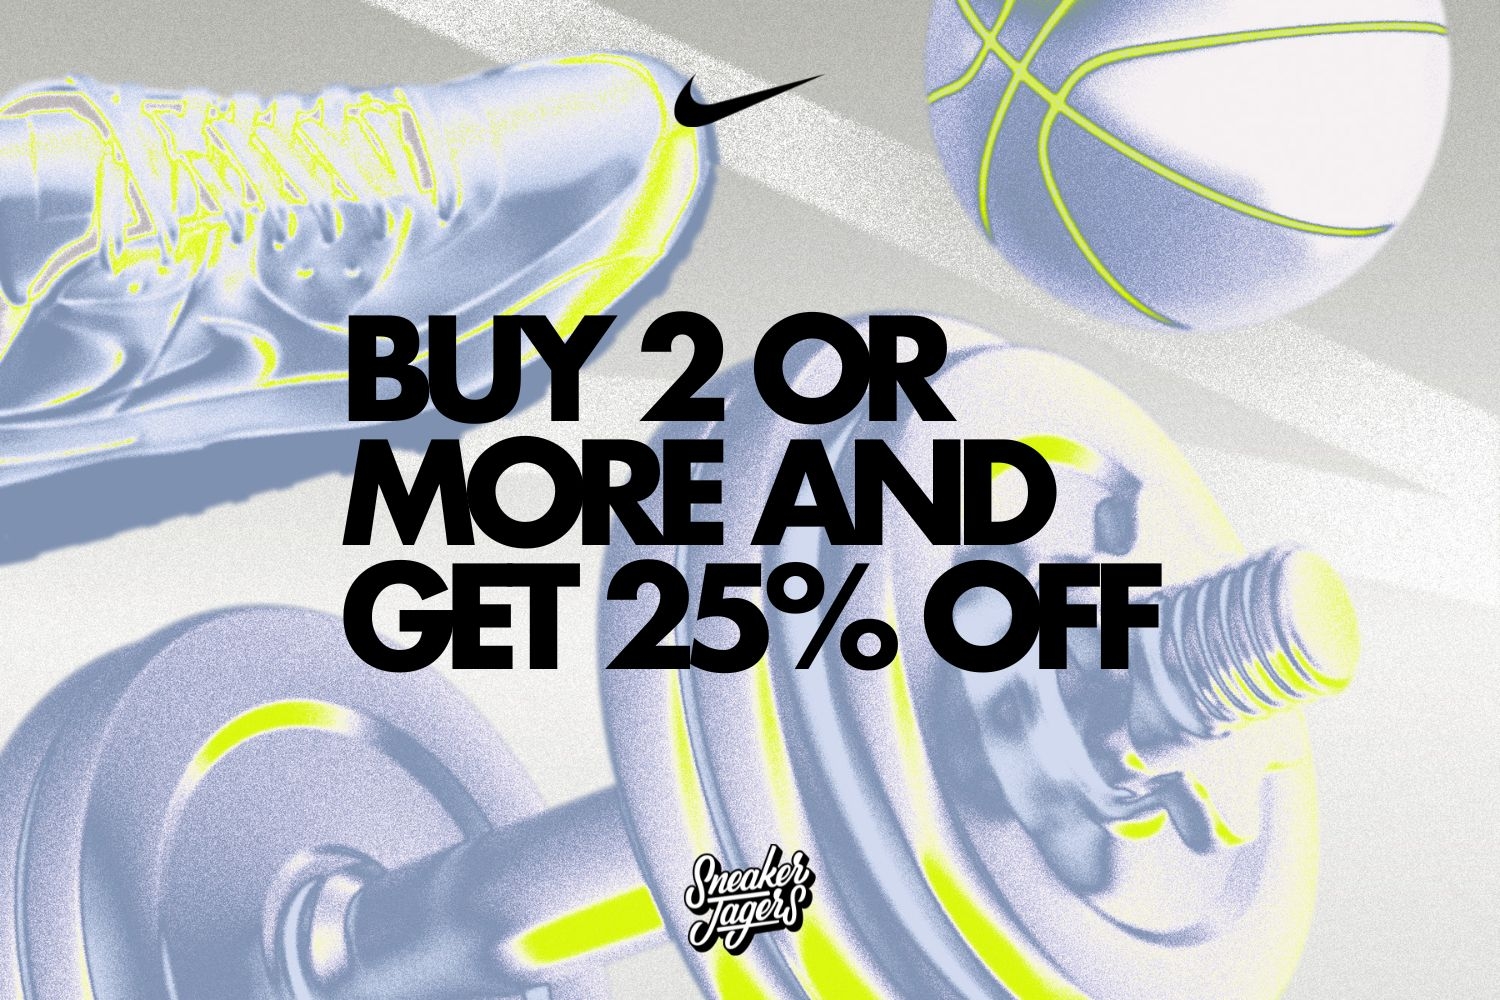 Nike Member bekommen 25% Rabatt während der Bundle Deals